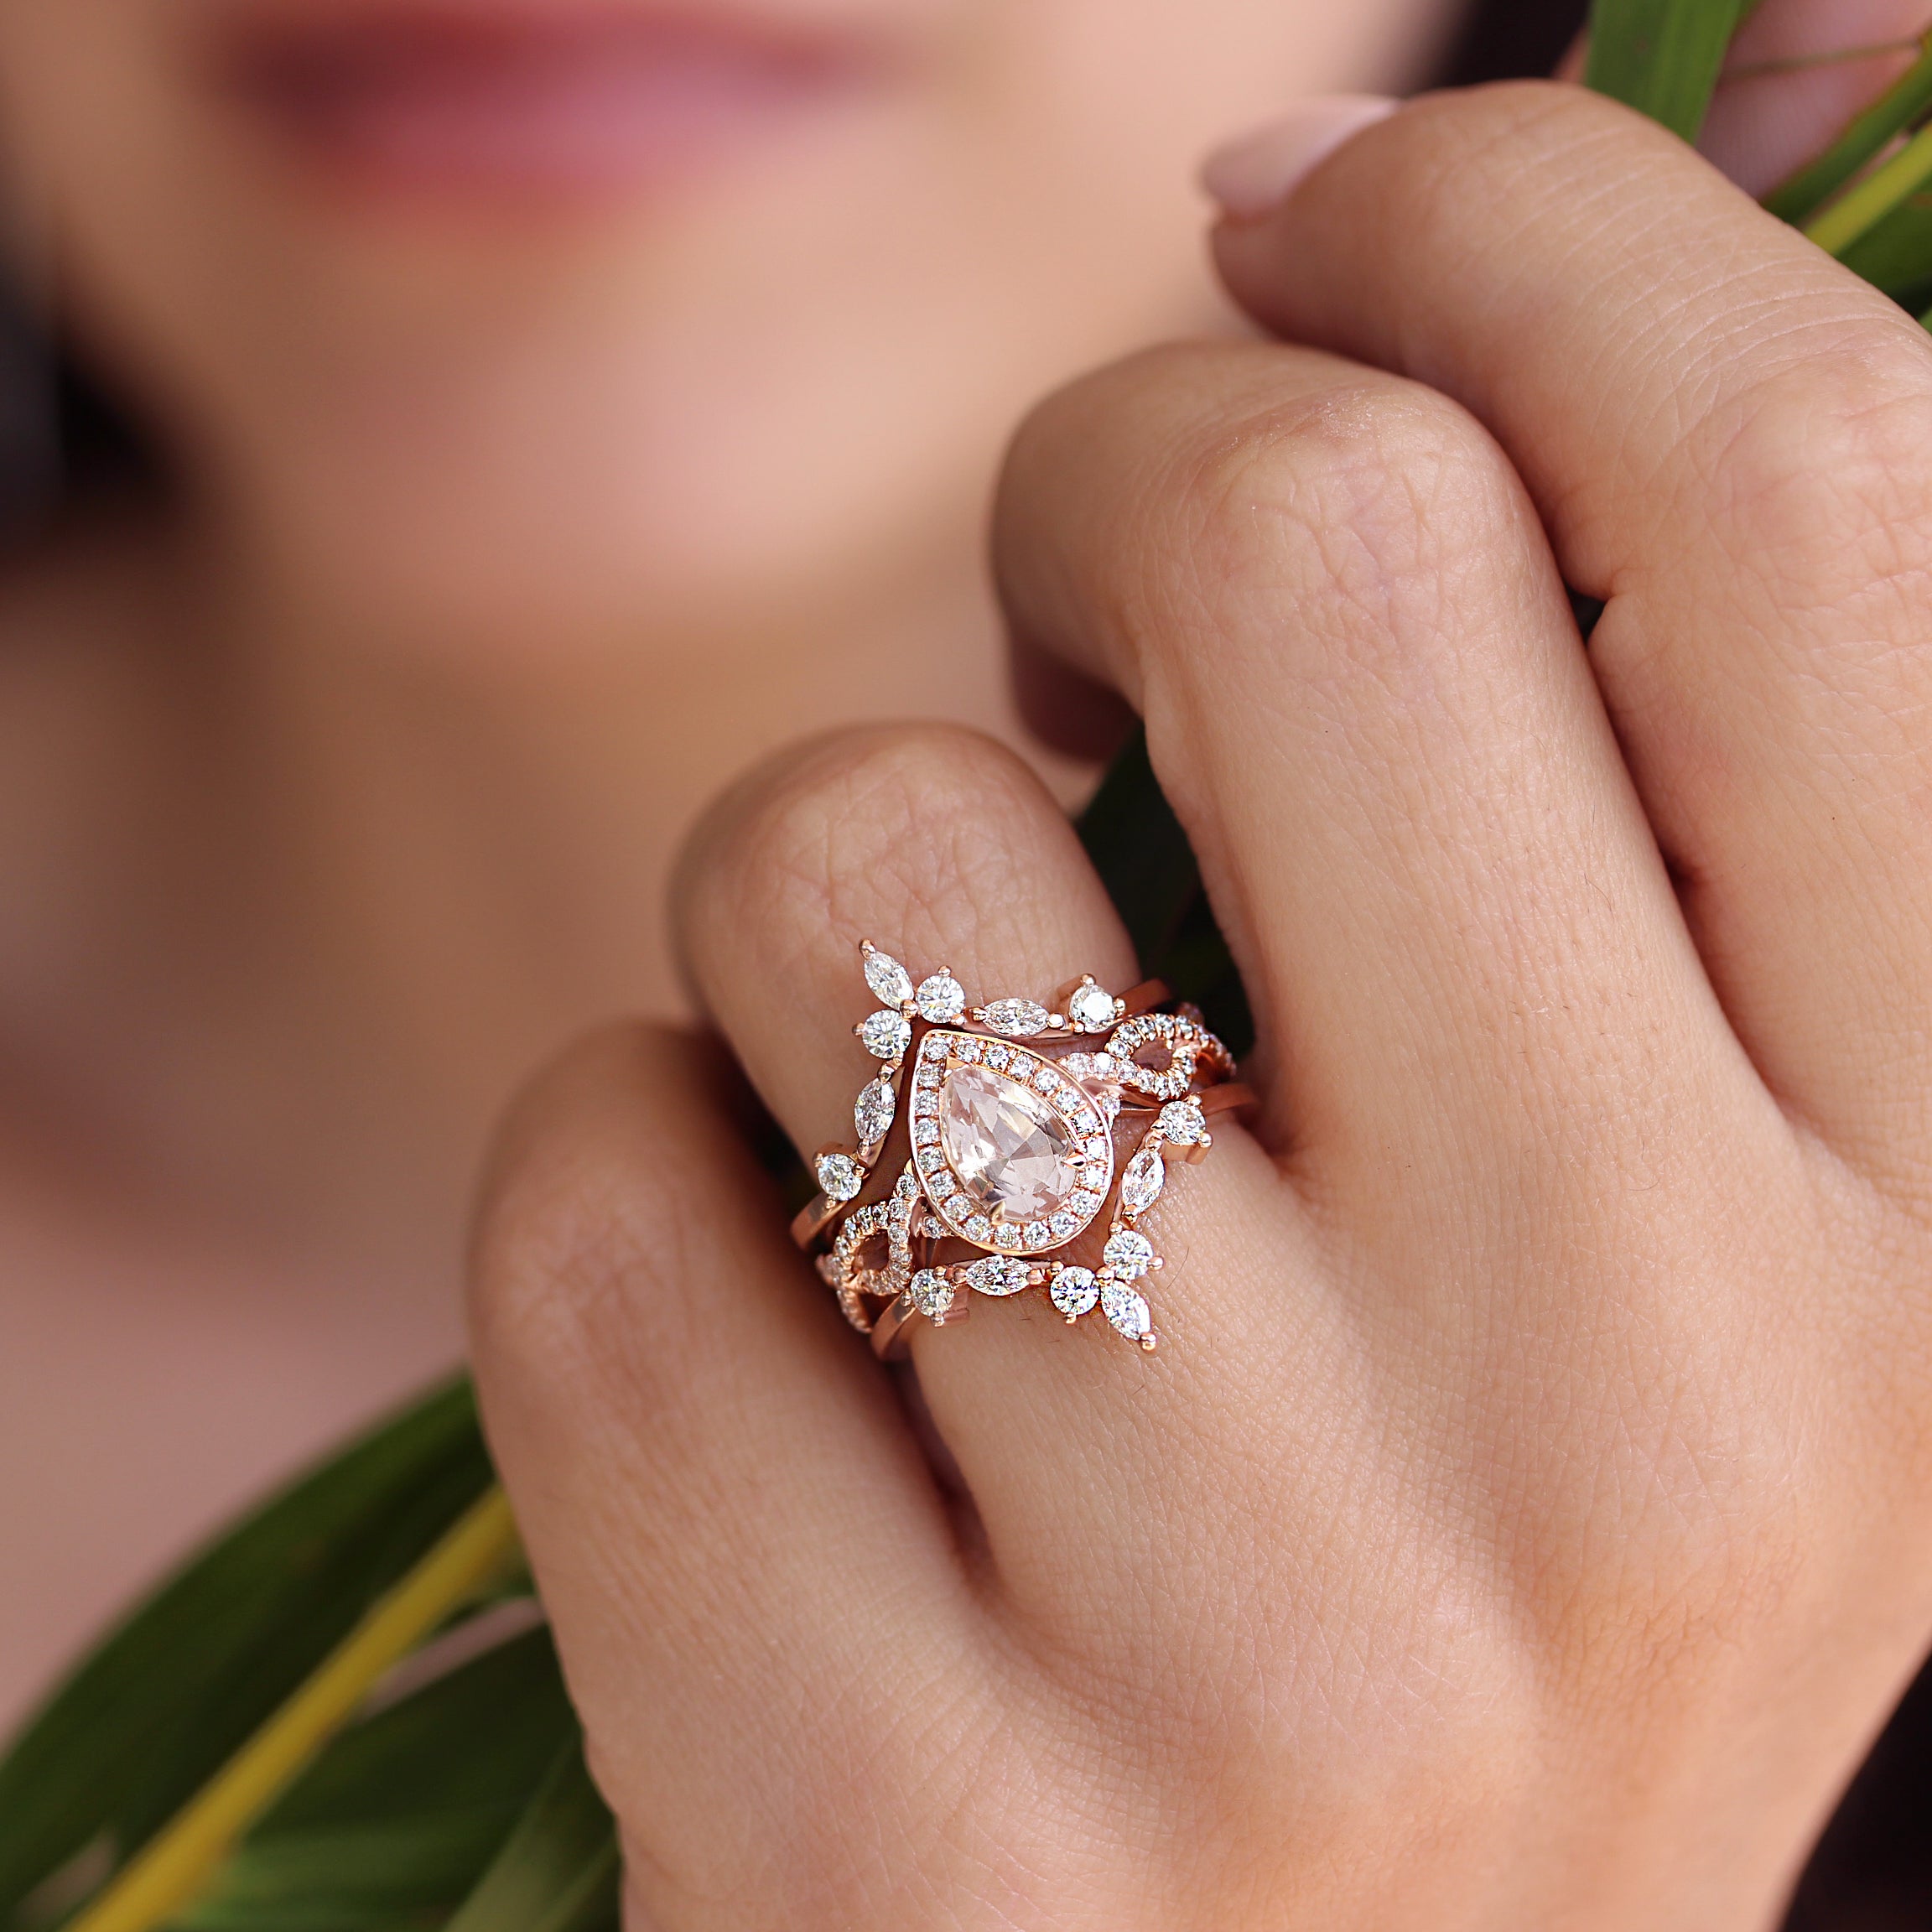 unique engagement rings rose gold